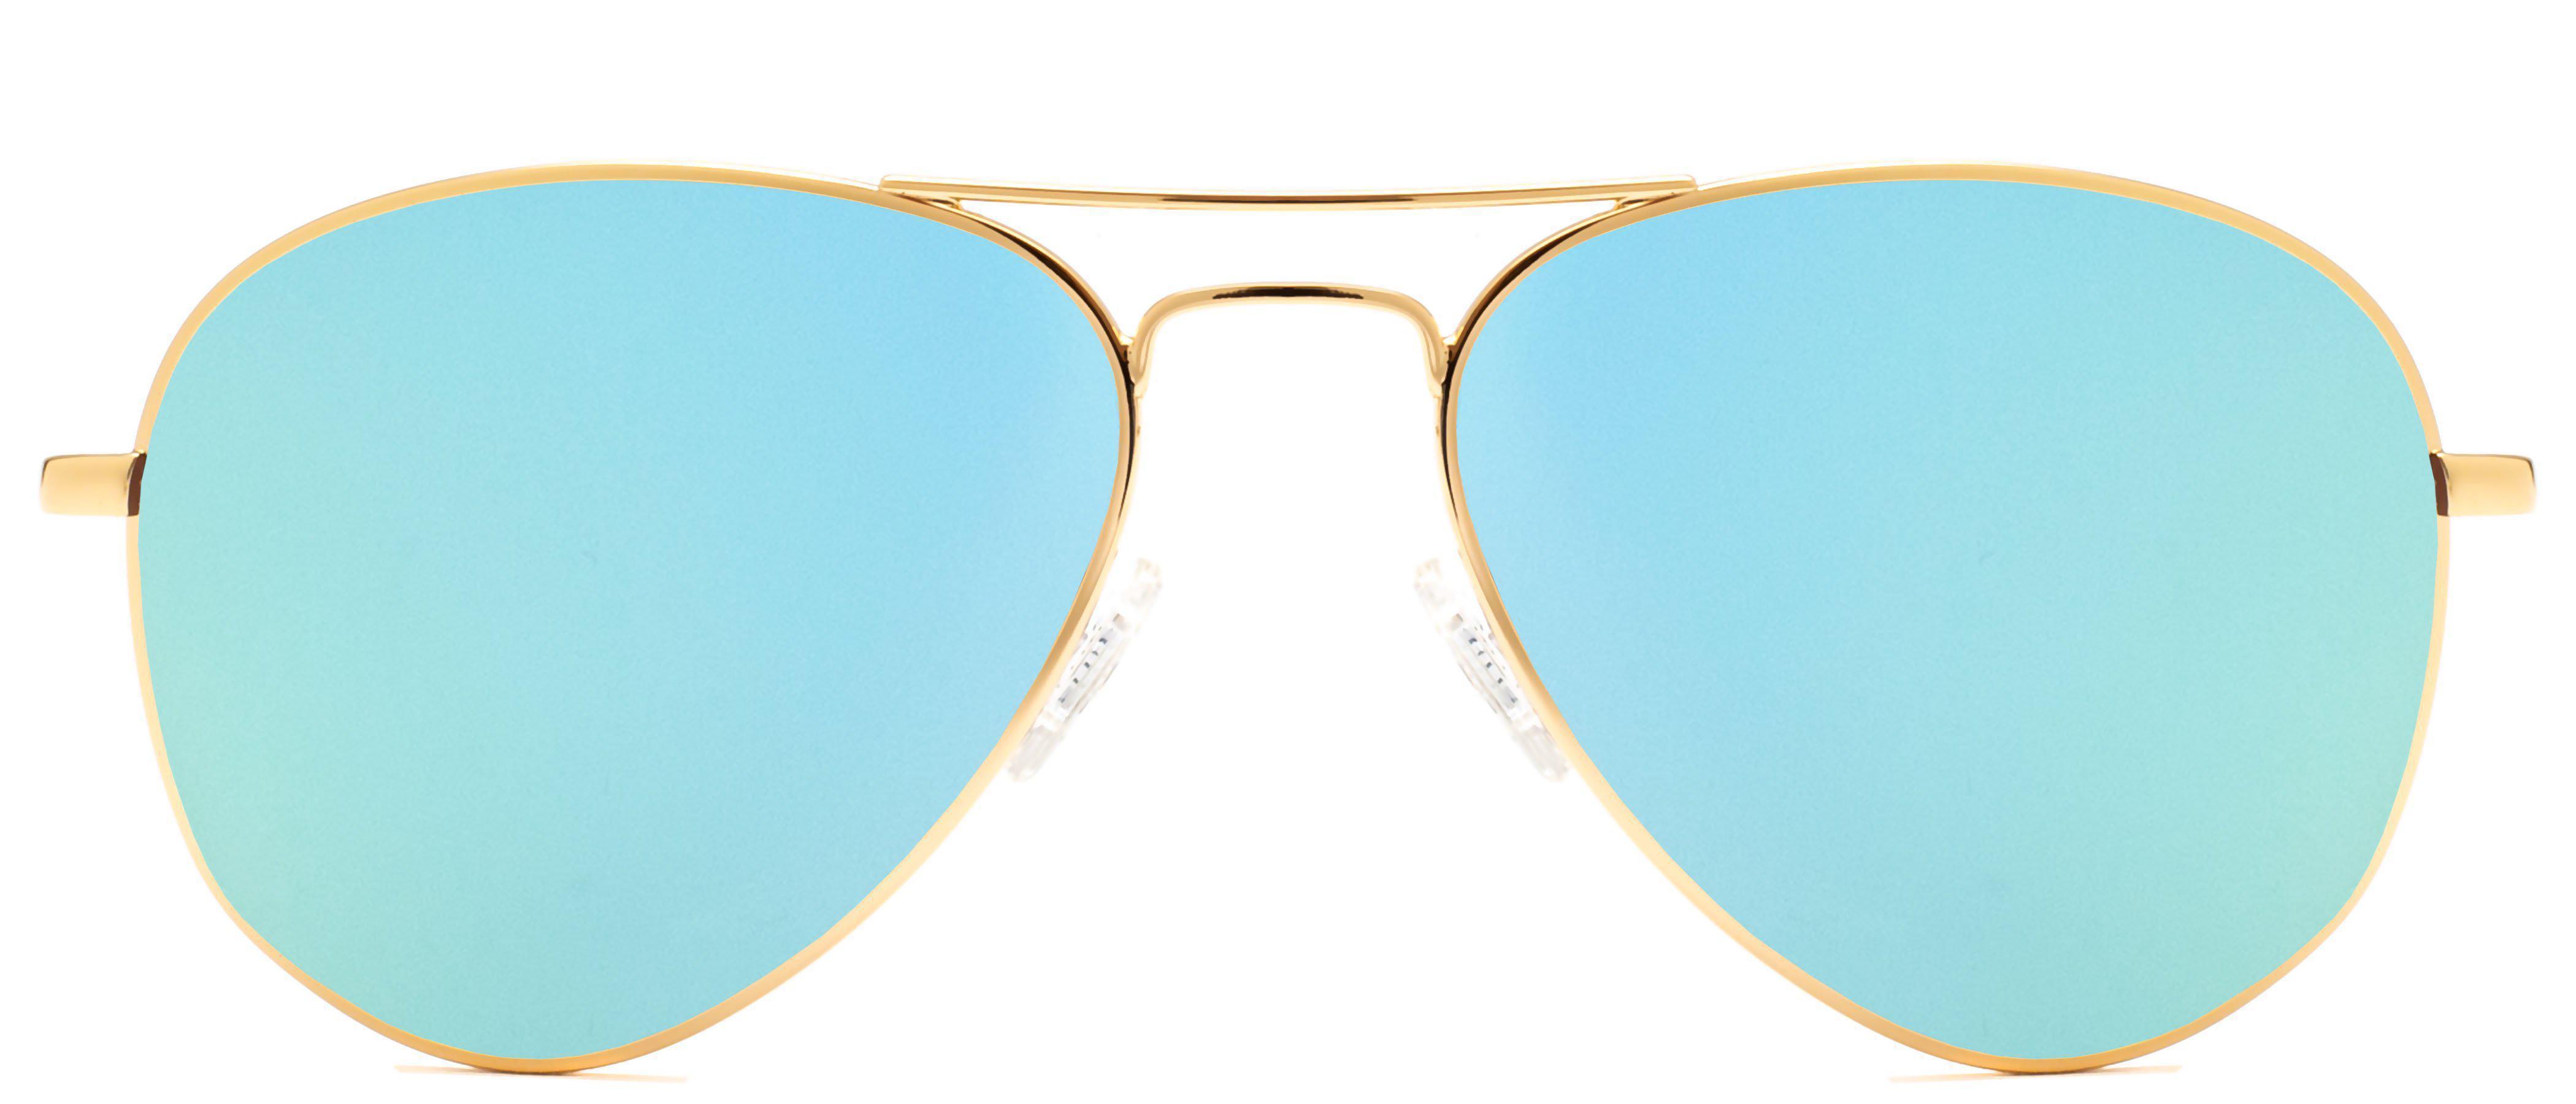 Buy Four20 Metal Aviator Polarized Sunglasses Online - NYS Collection  Eyewear